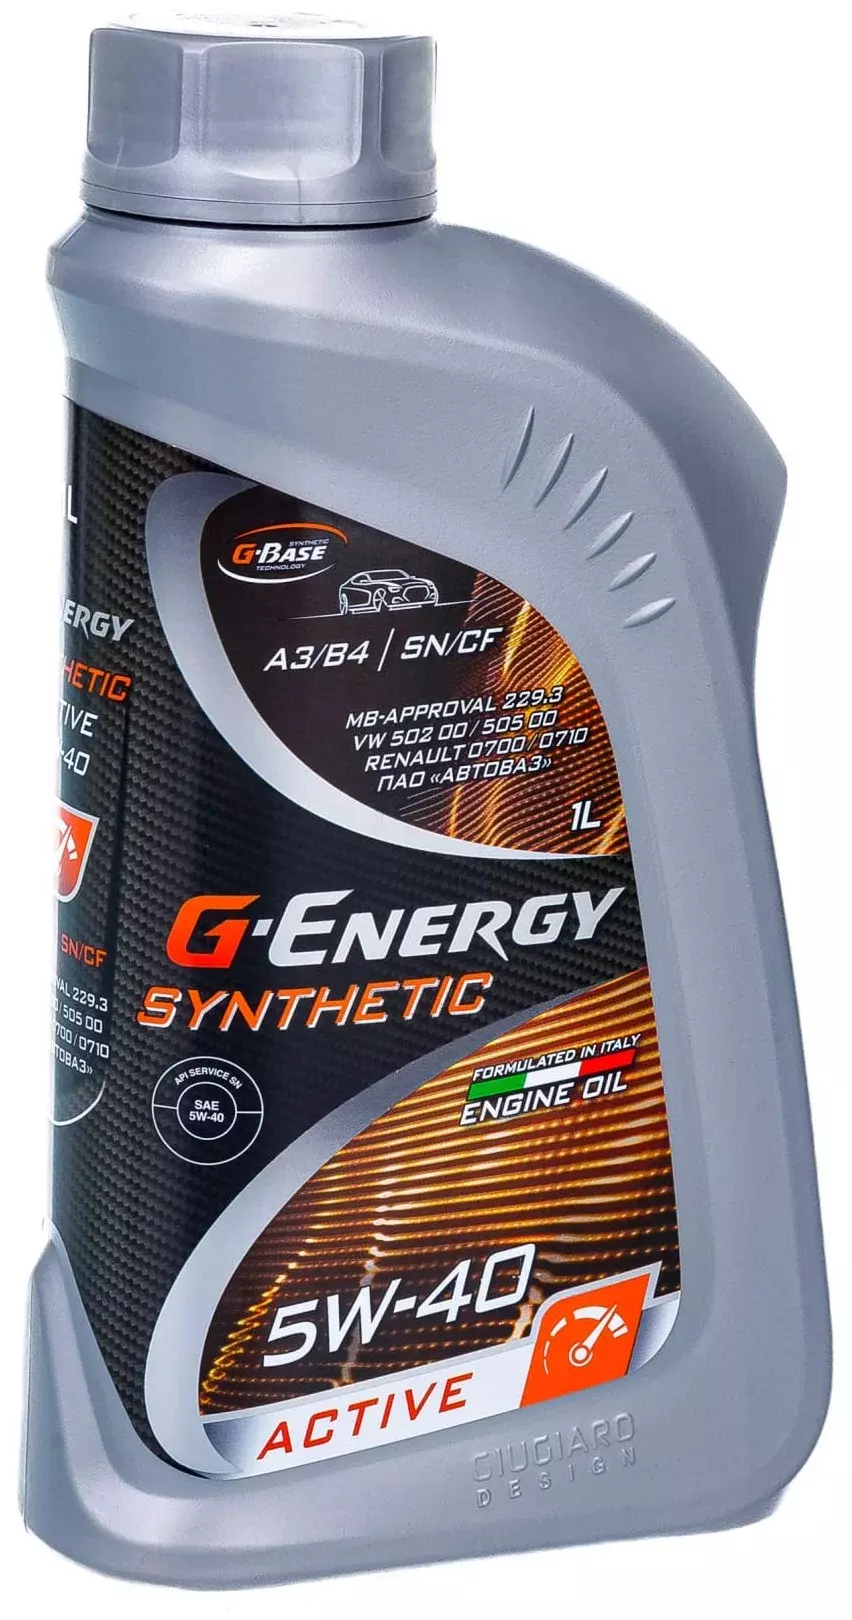 Масло моторное G-Energy Synthetic Active 5W-40 синтетическое 1 л